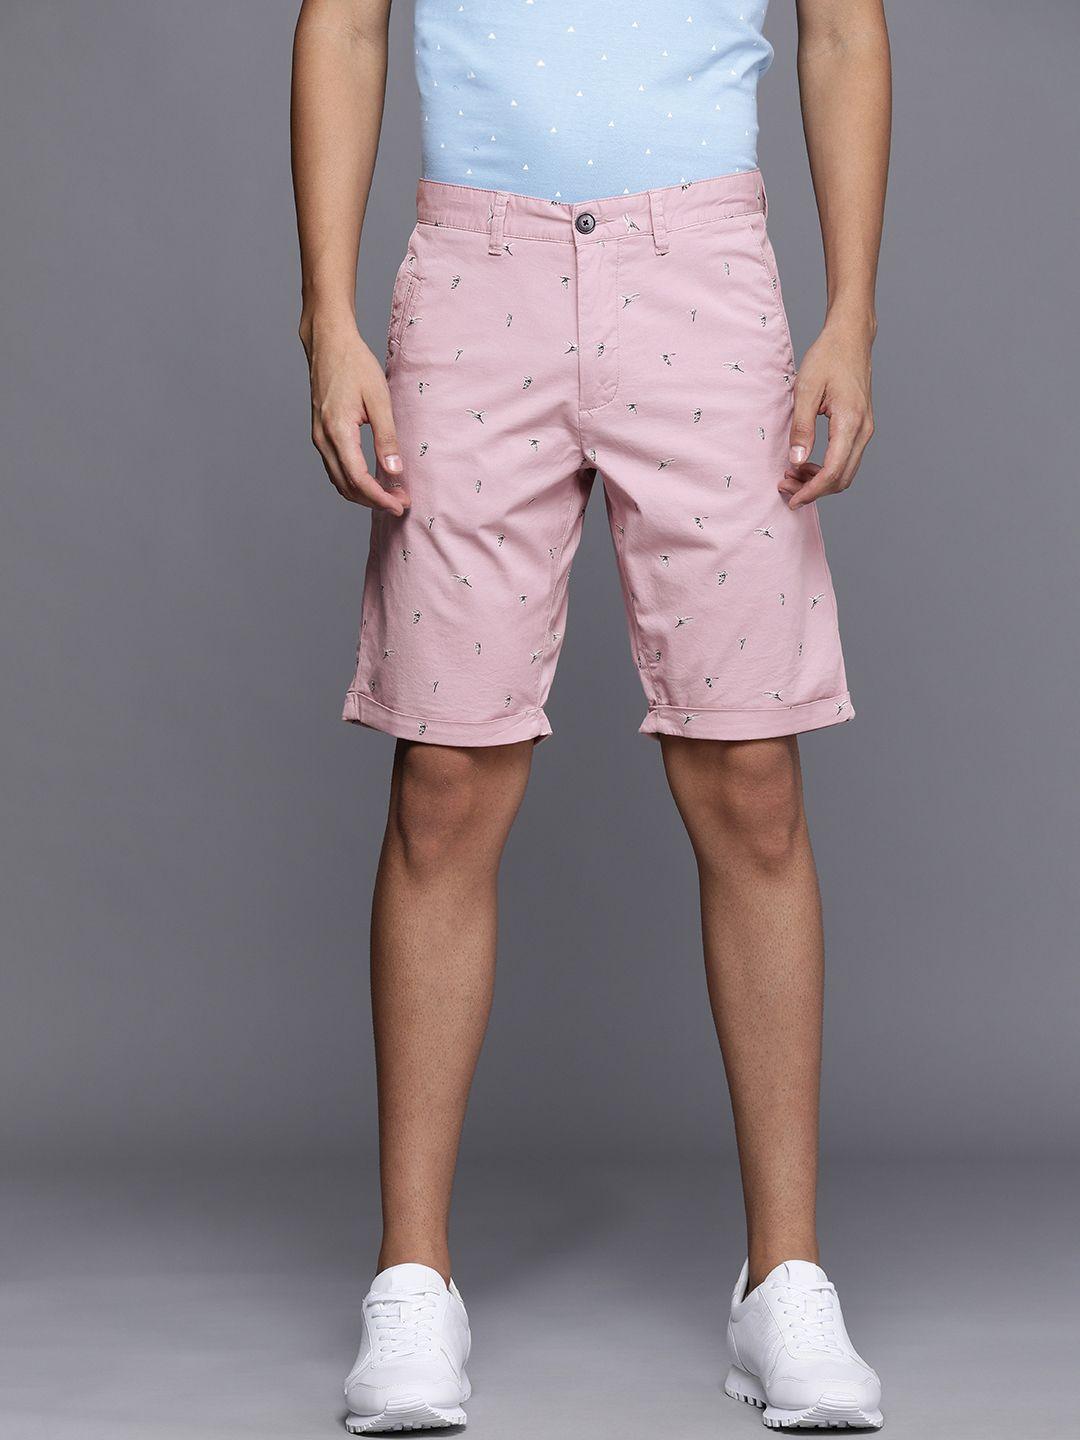 louis philippe sport men pink conversational printed slim fit low-rise shorts